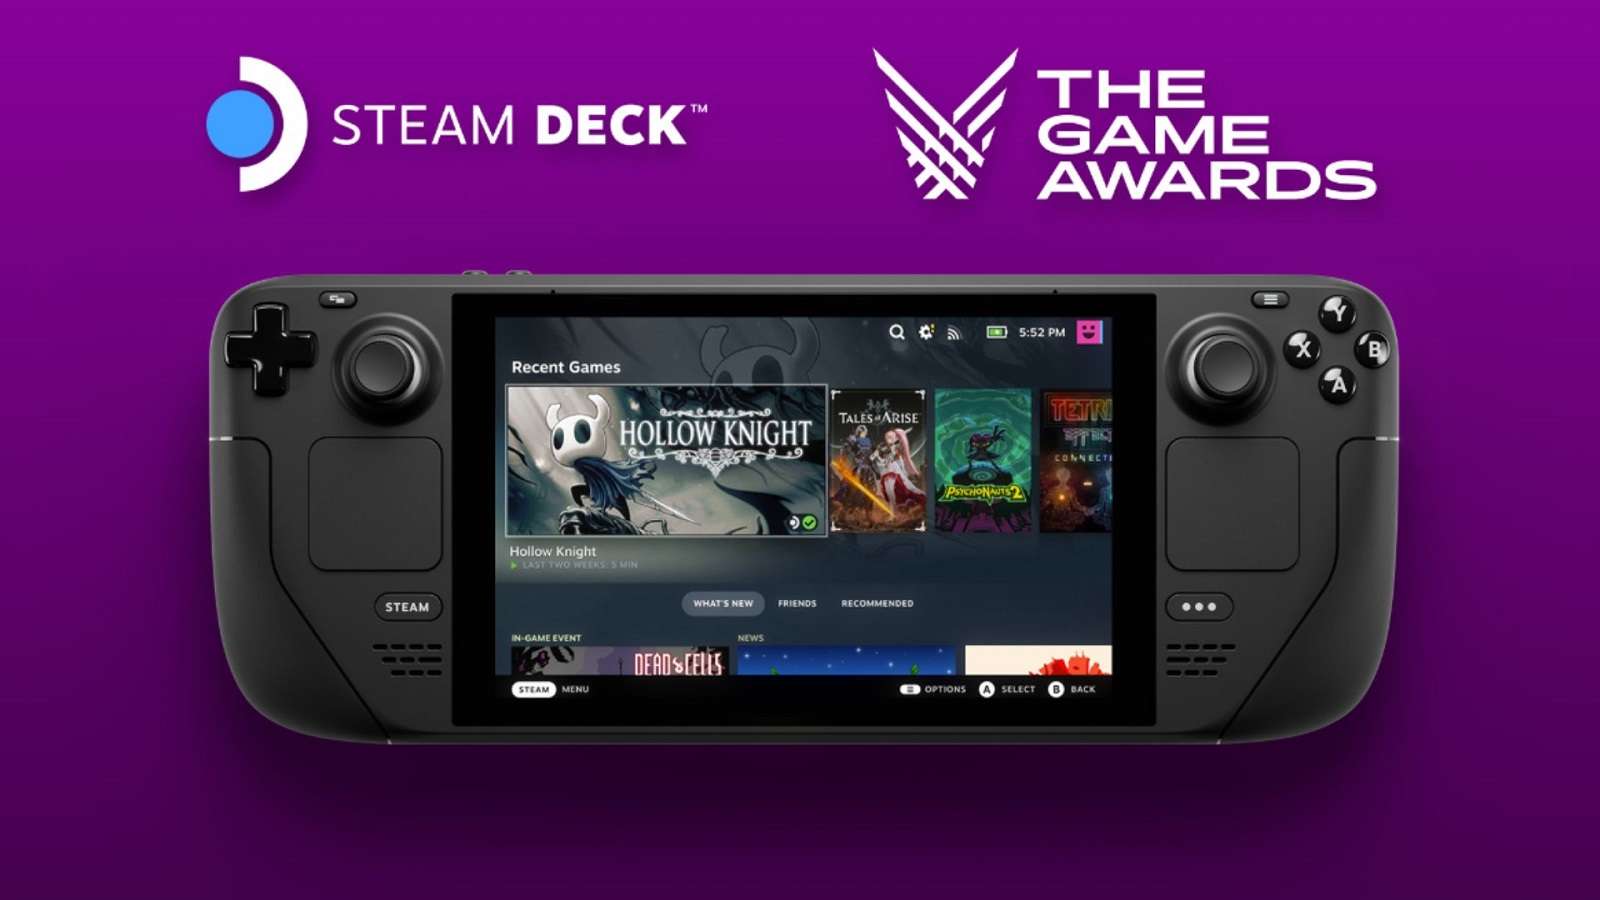 Steam Deck The Game Awards promo screenshot